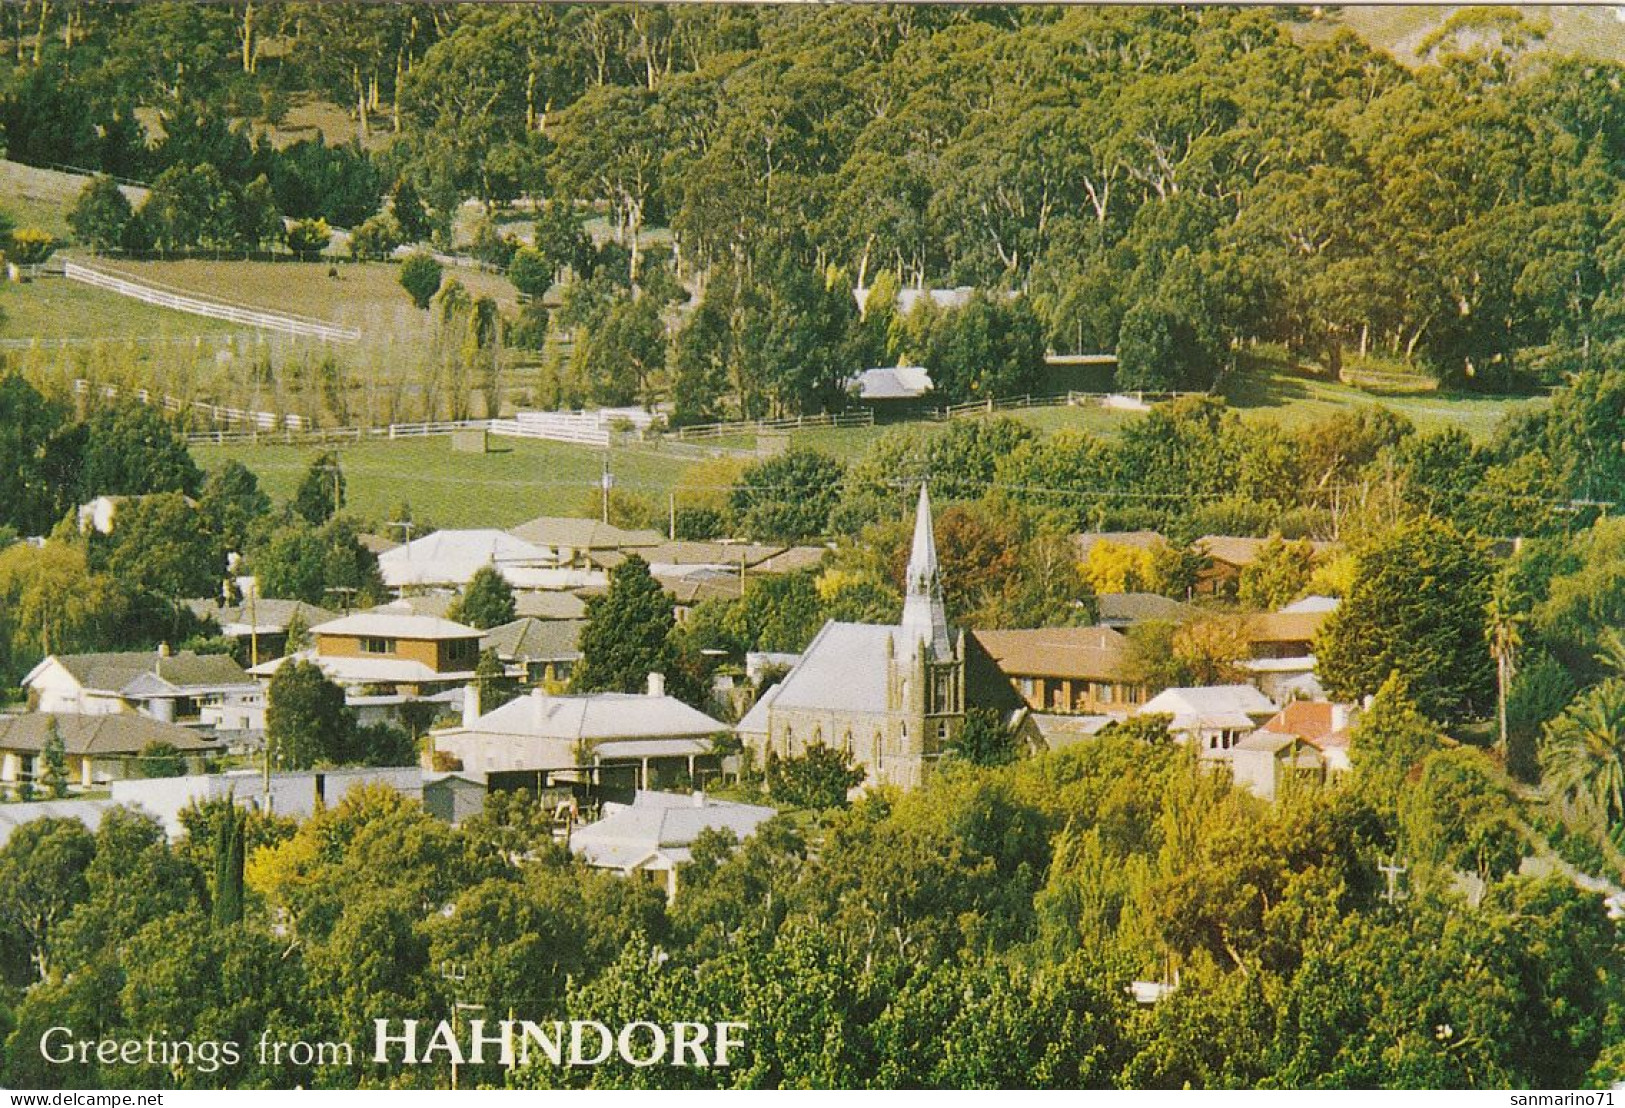 POSTCARD 1330,Australia,Hahndorf - Adelaide